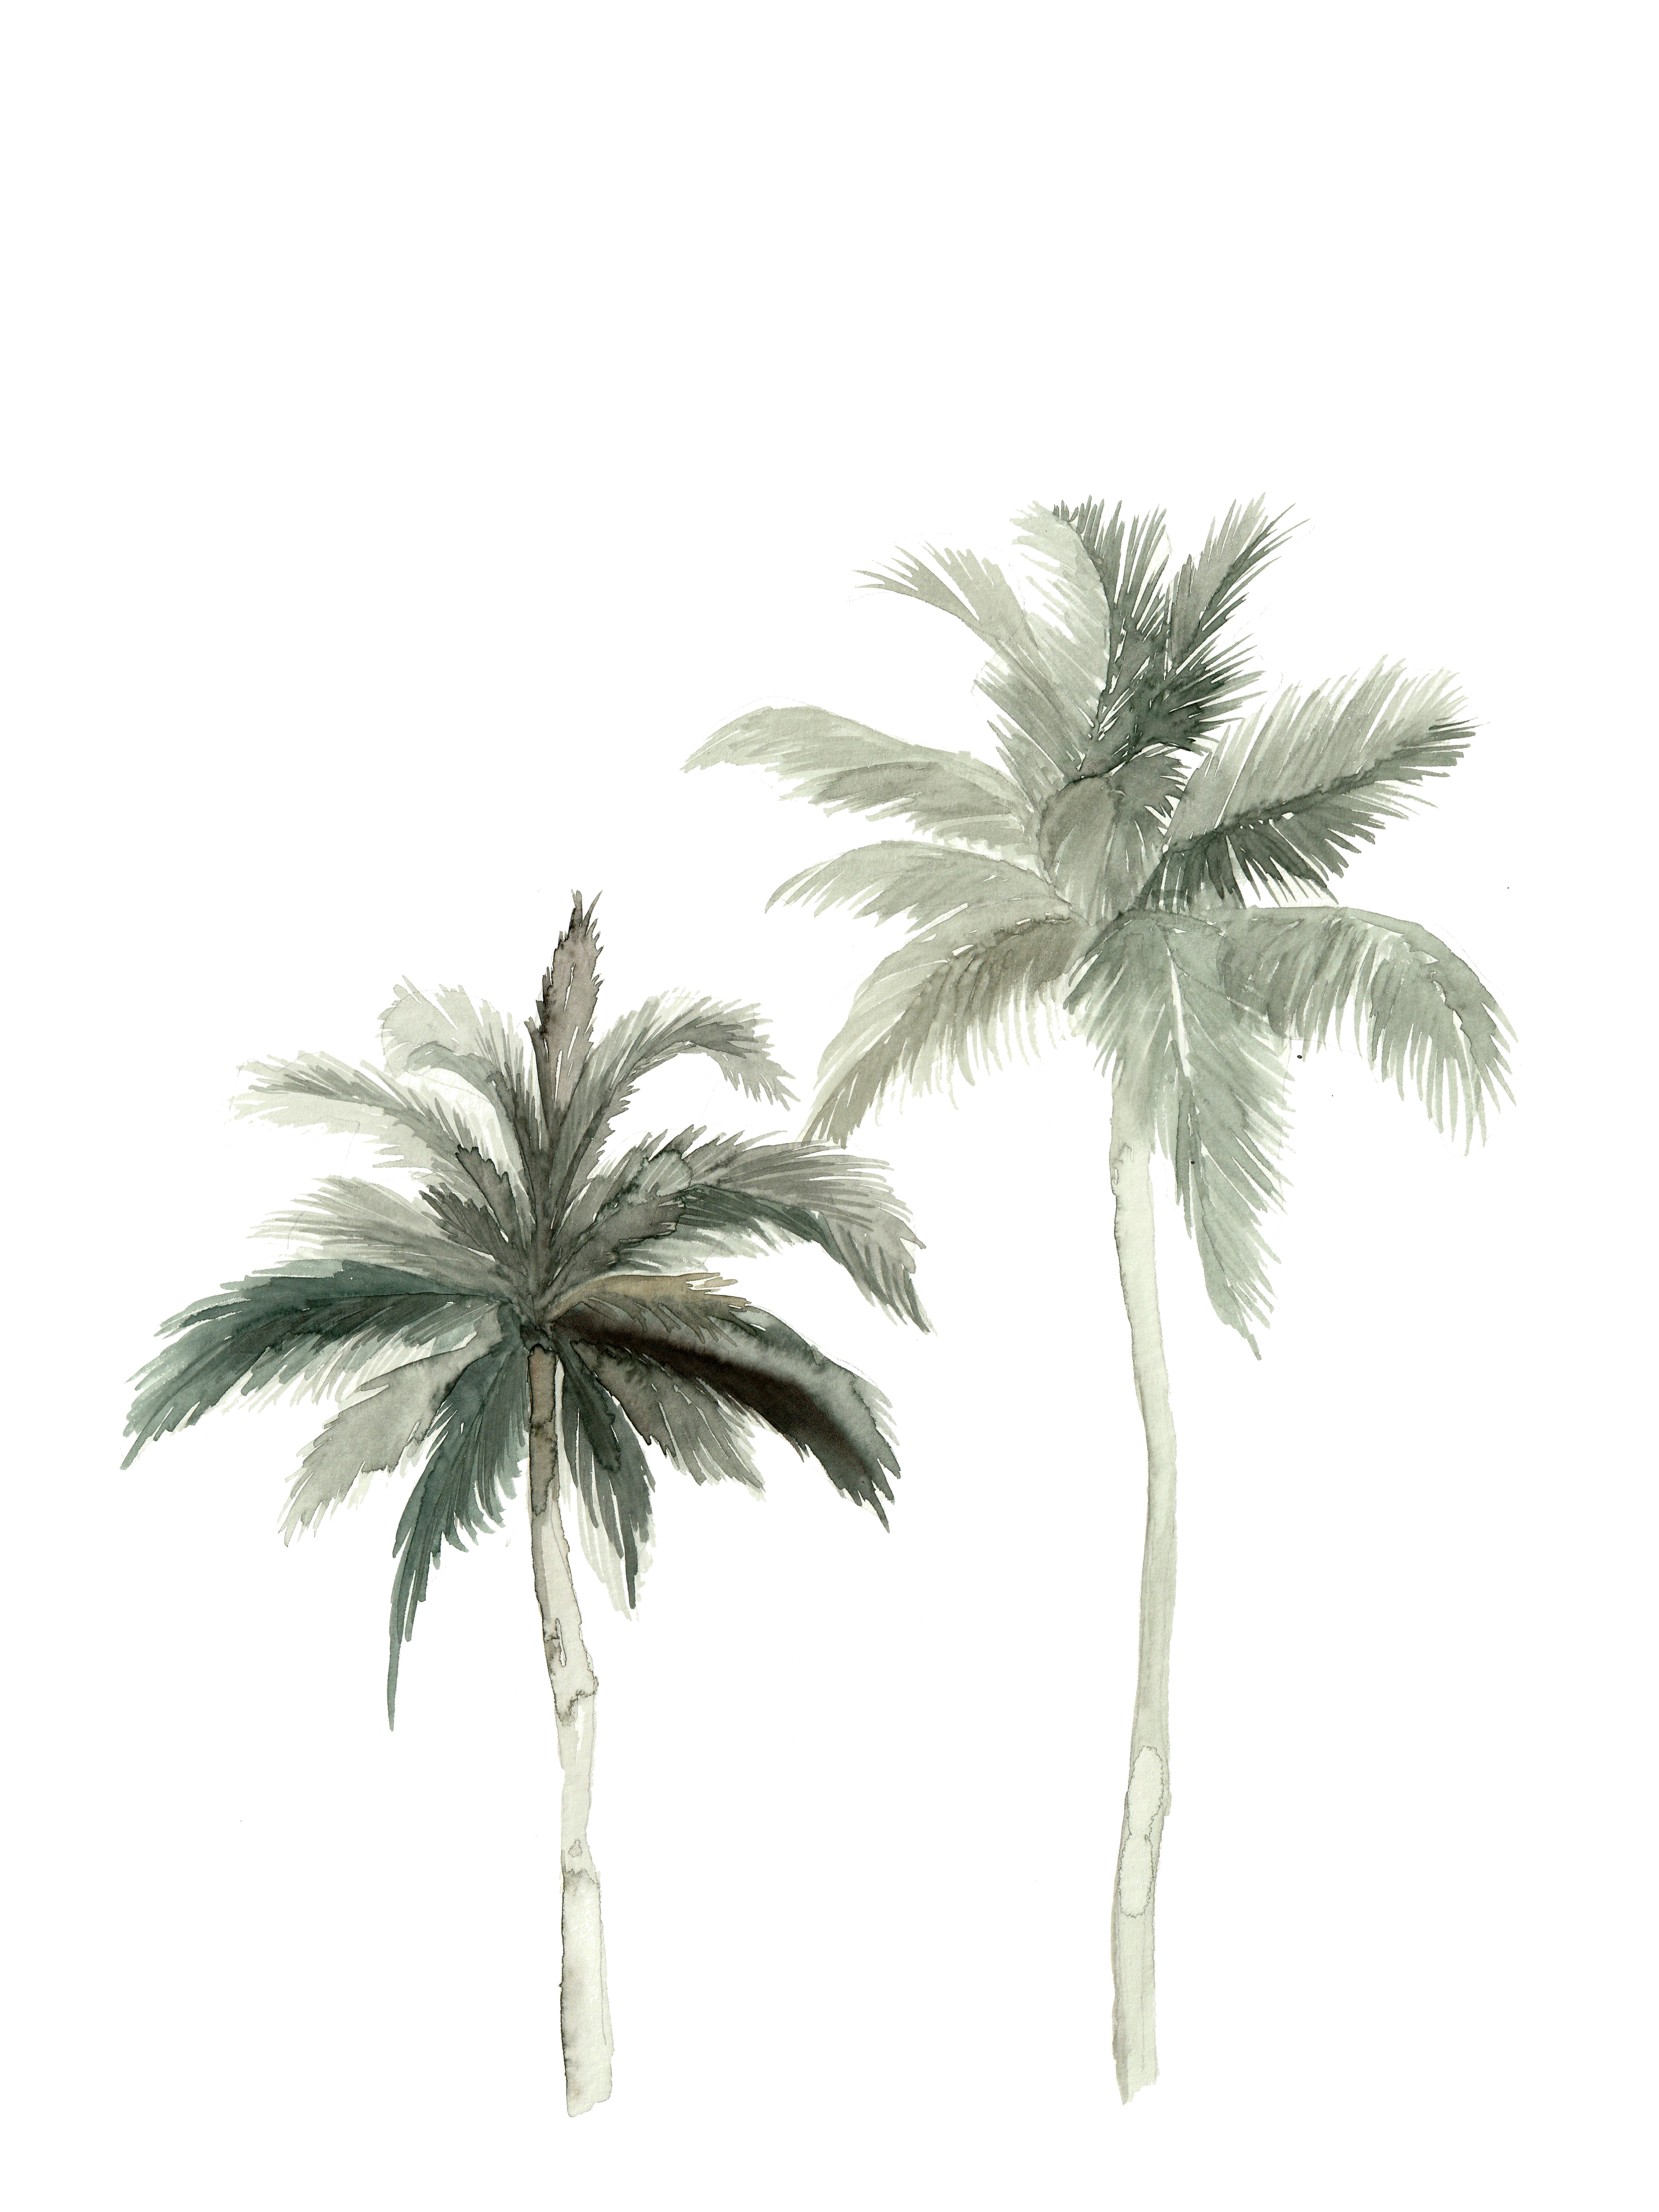 983-botanical-illustration---palmtrees.jpg